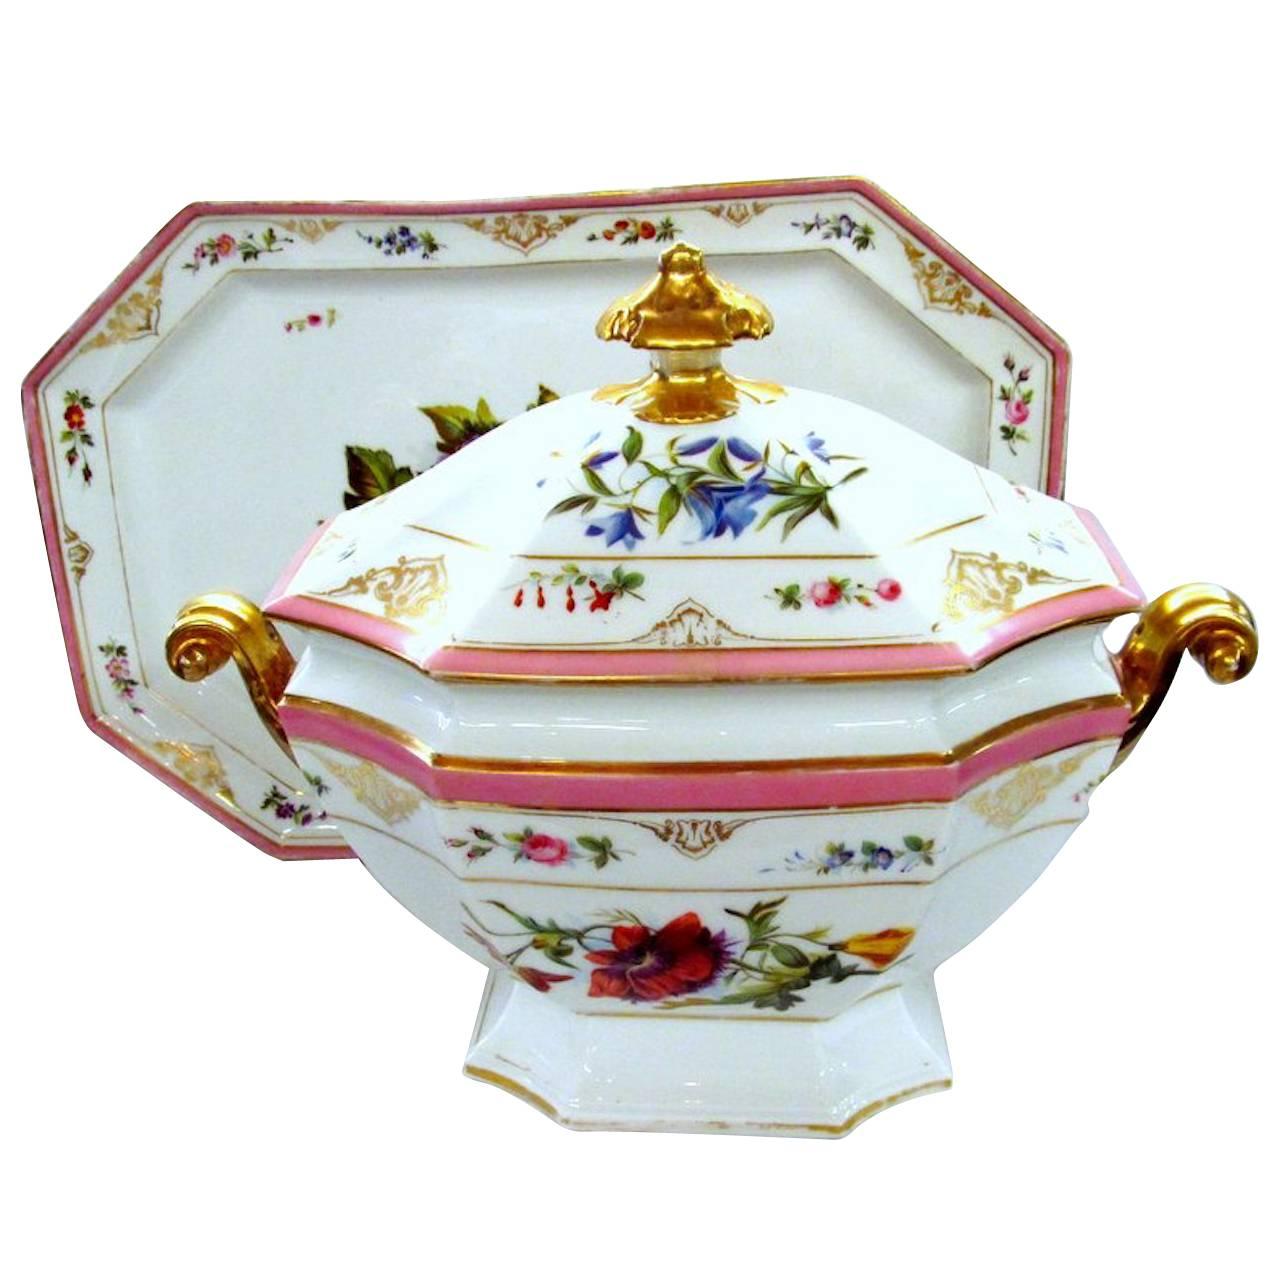 Antique French Porcelain de Paris Hand-Painted Soup Tureen and Matching Platter